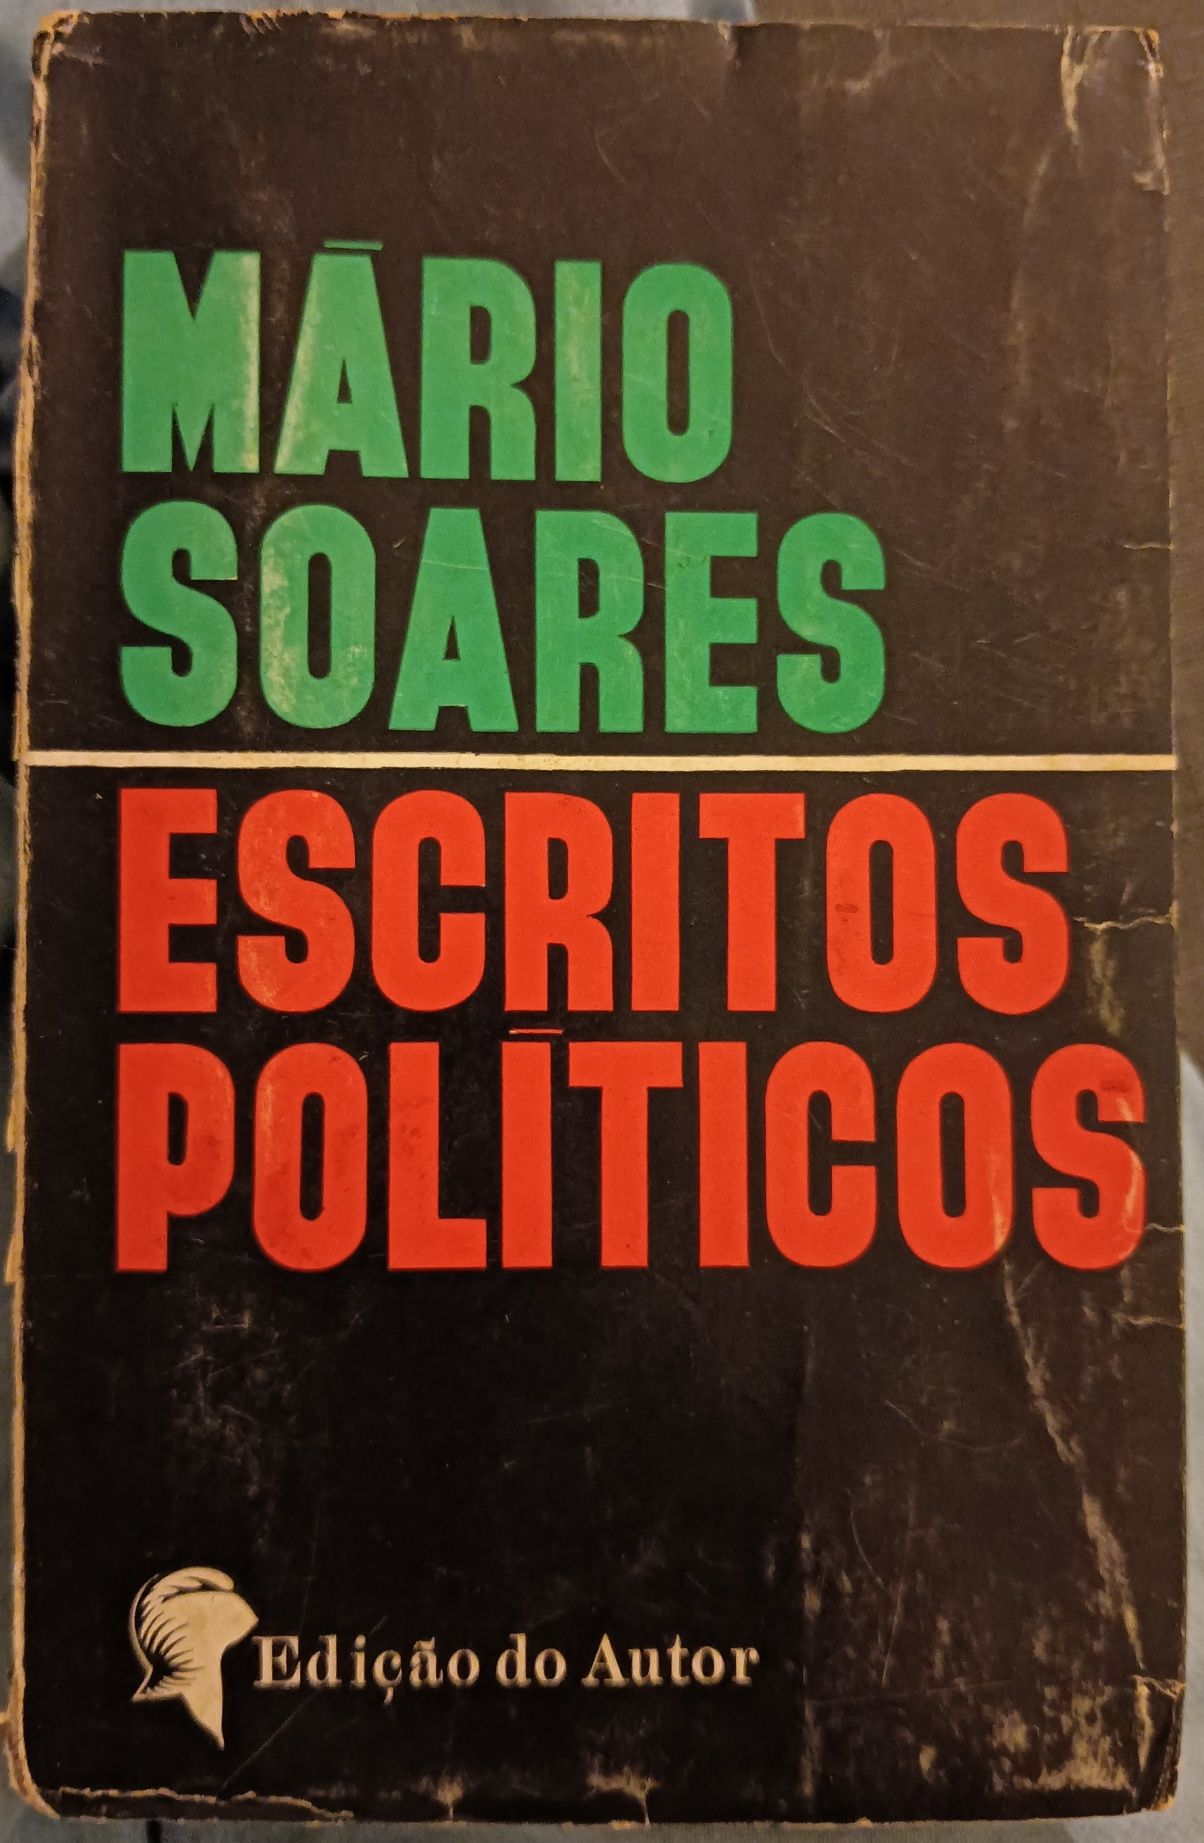 Escritos políticos, de Mário Soares